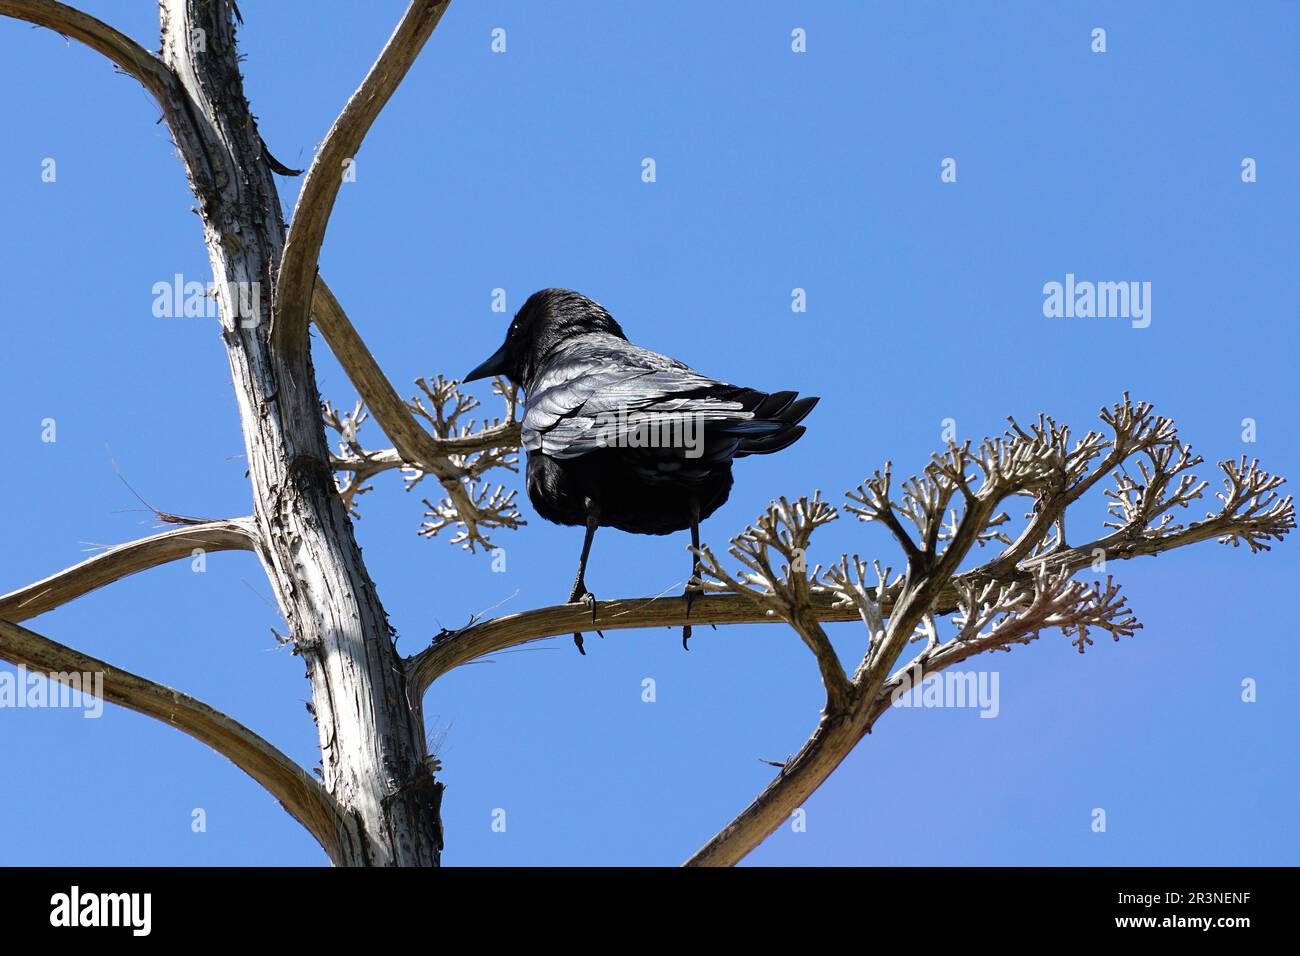 American crow, Amerikanerkrähe, Corneille d'Amérique, Corvus brachyrhynchos, Santa Monica, Los Angeles County, California, USA, North America Stock Photo